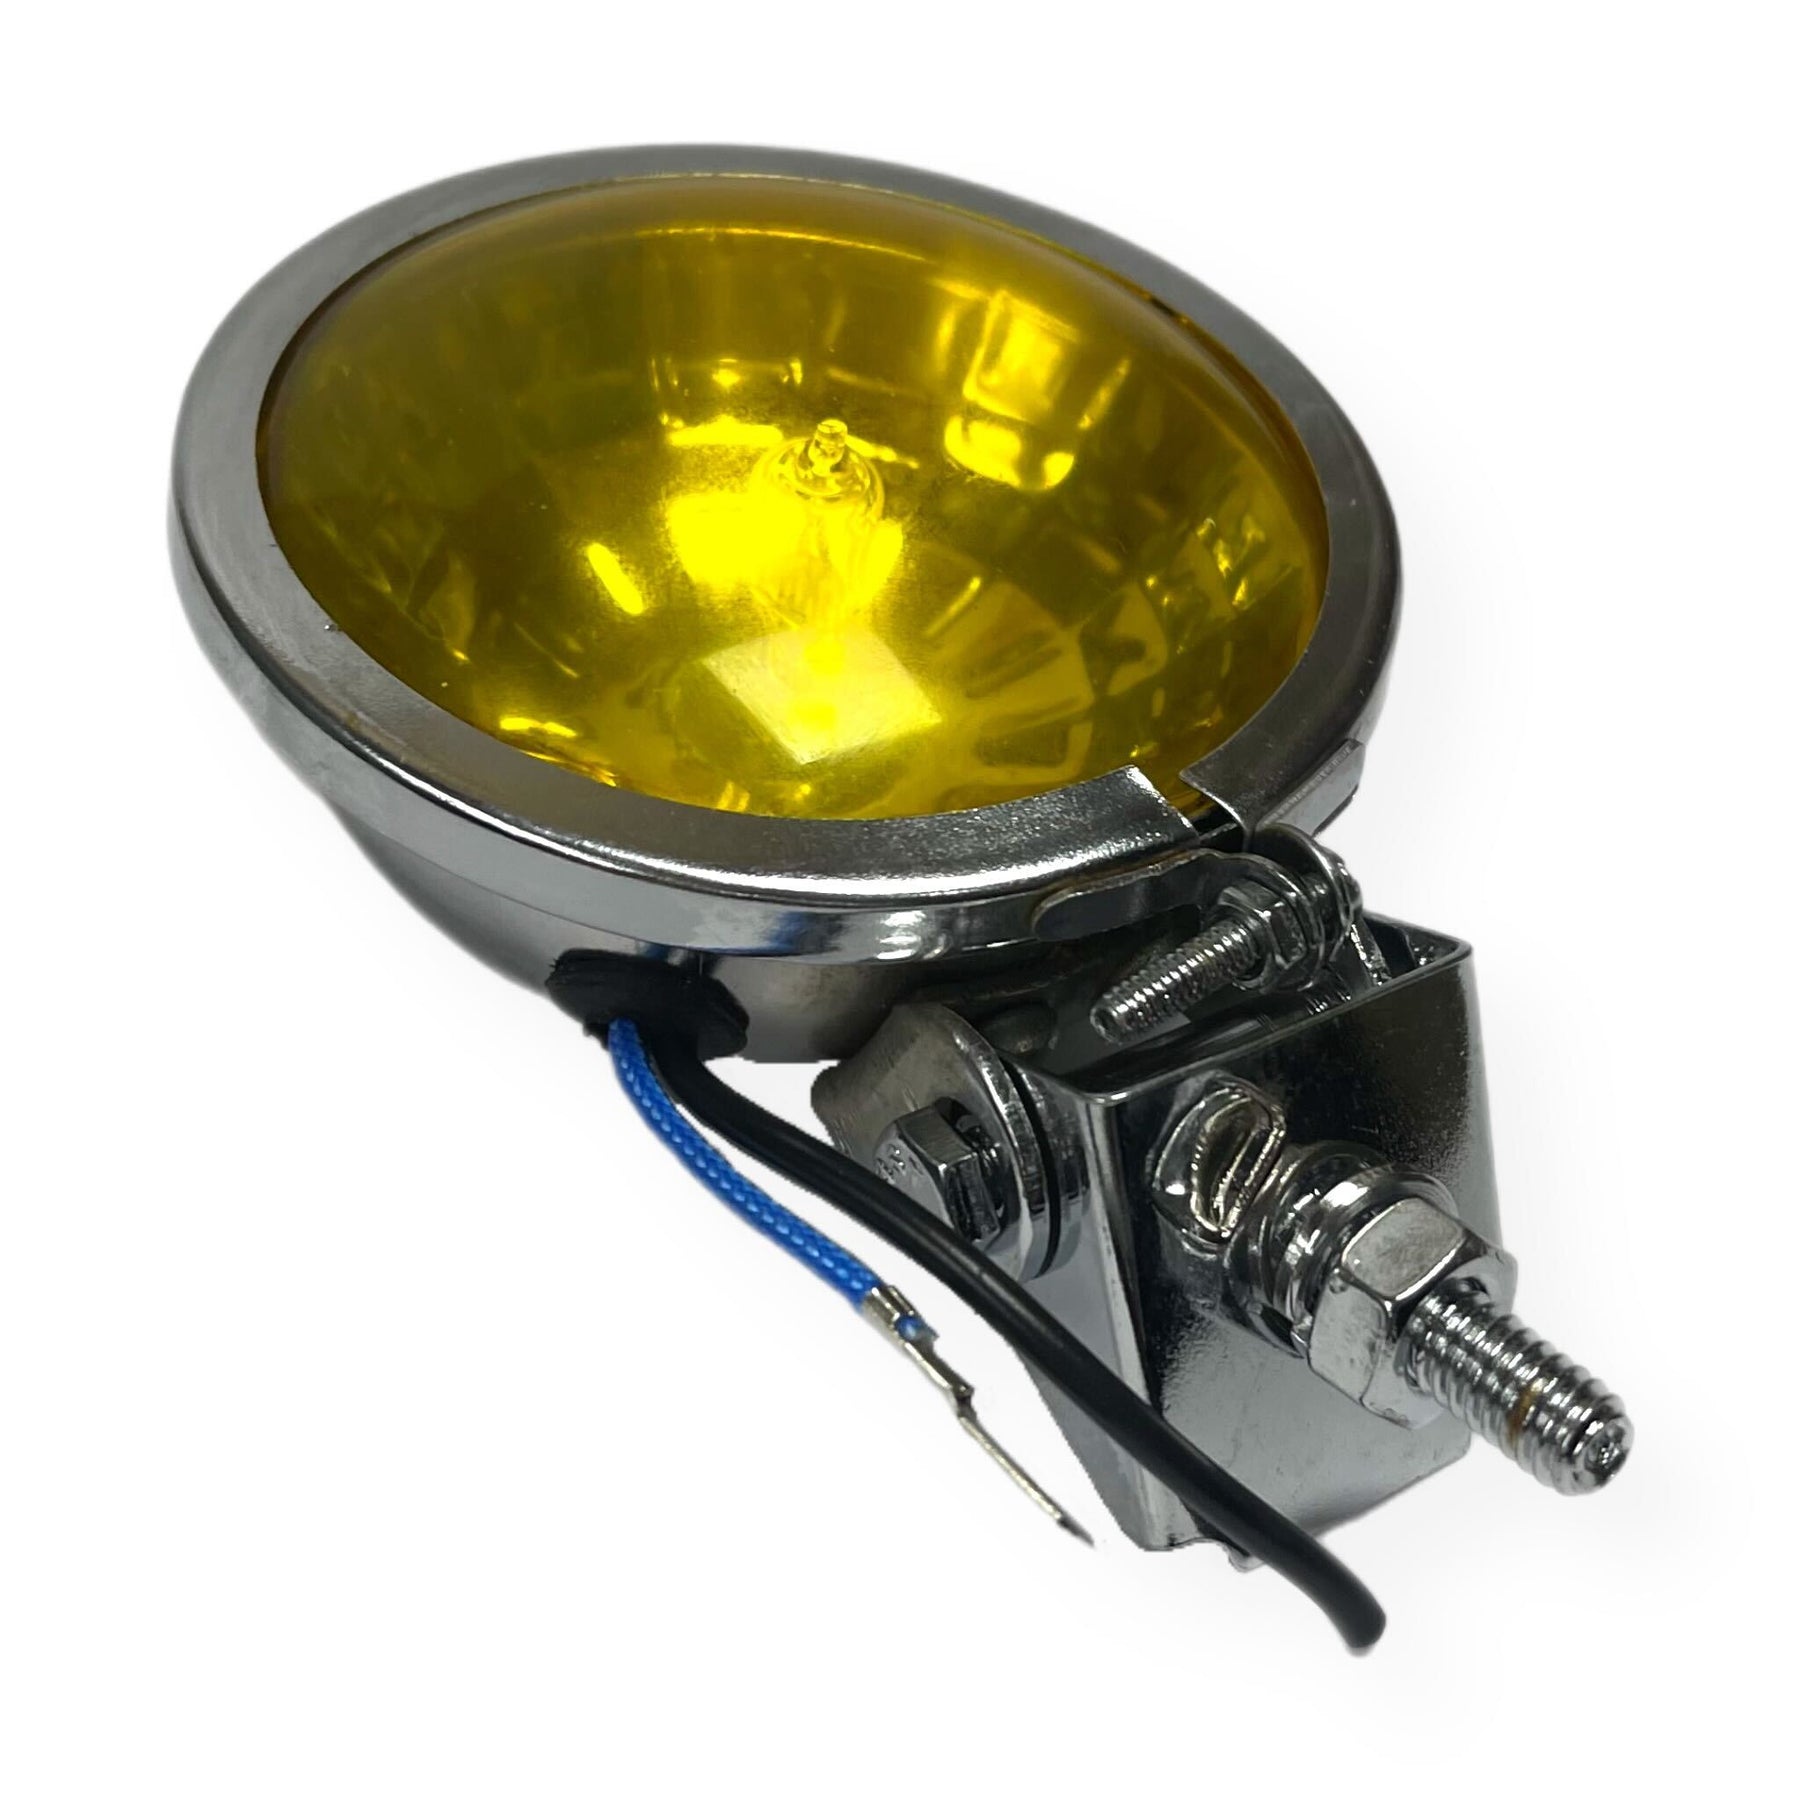 Vespa Lambretta Scooter Lamp Spot Light 9cm Honeycomb Chrome Yellow Lens